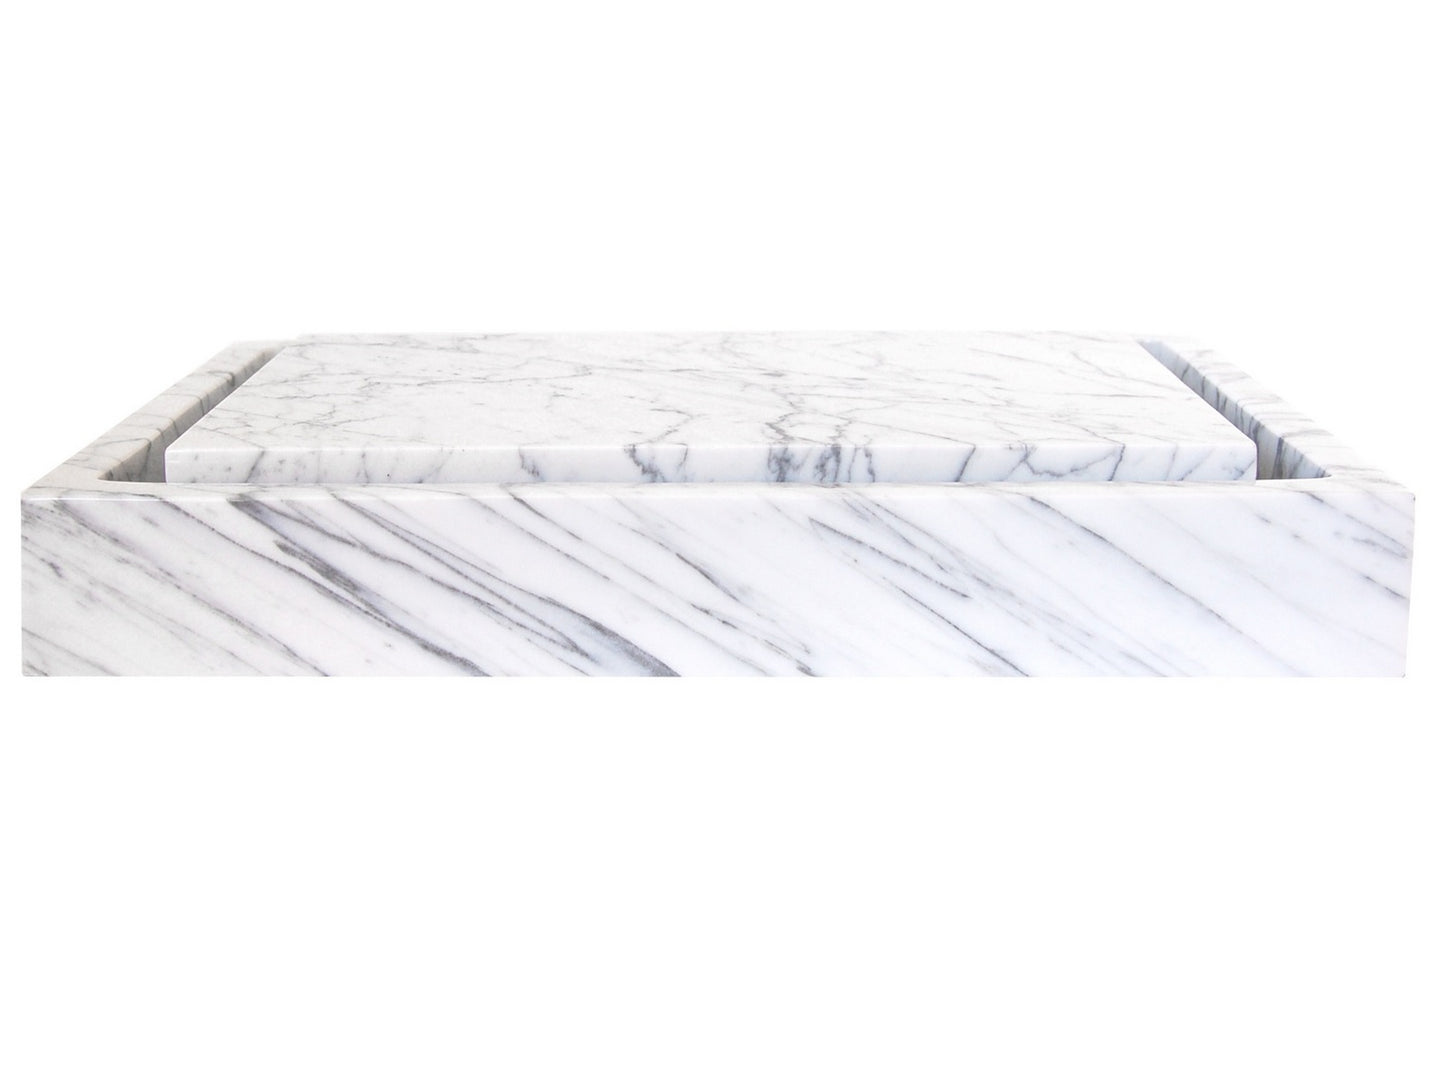 Rectangular Infinity Pool Sink - White Carrara Marble